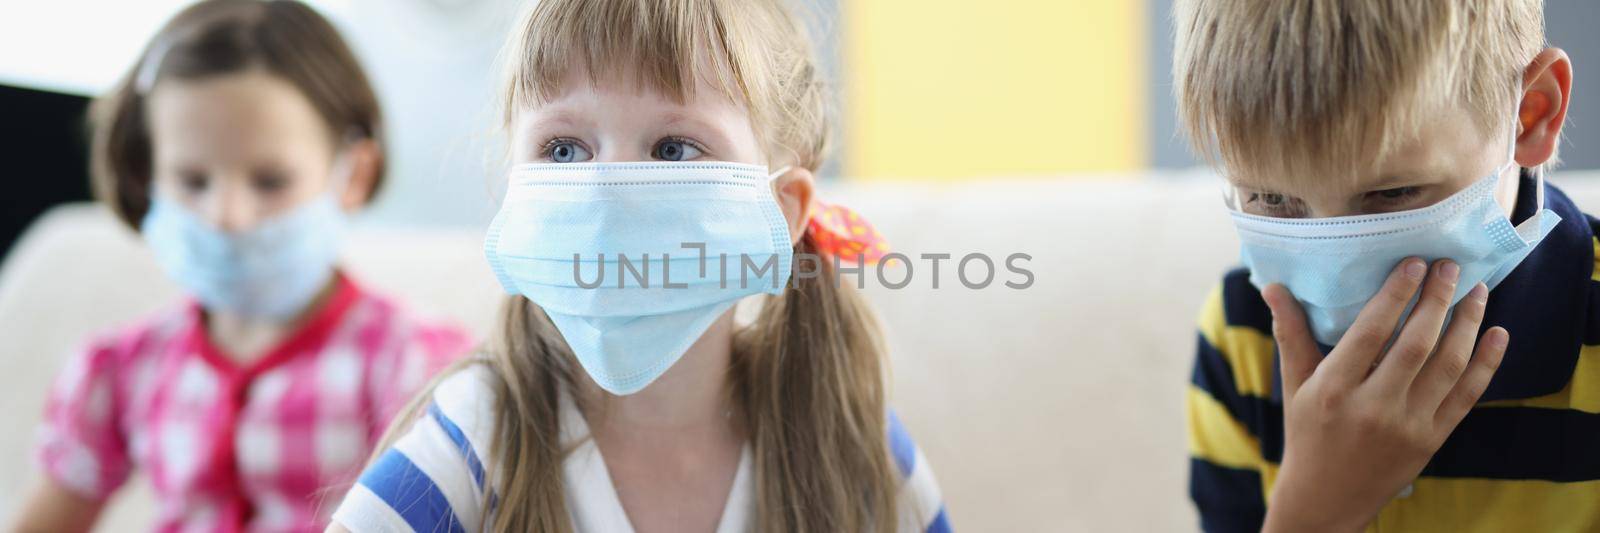 Portrait of children wearing face masks, infection in kindergarten, friends got sick, symptoms of virus. Boy coughing, closing mouth. Coronavirus spread, health, medication, quarantine concept